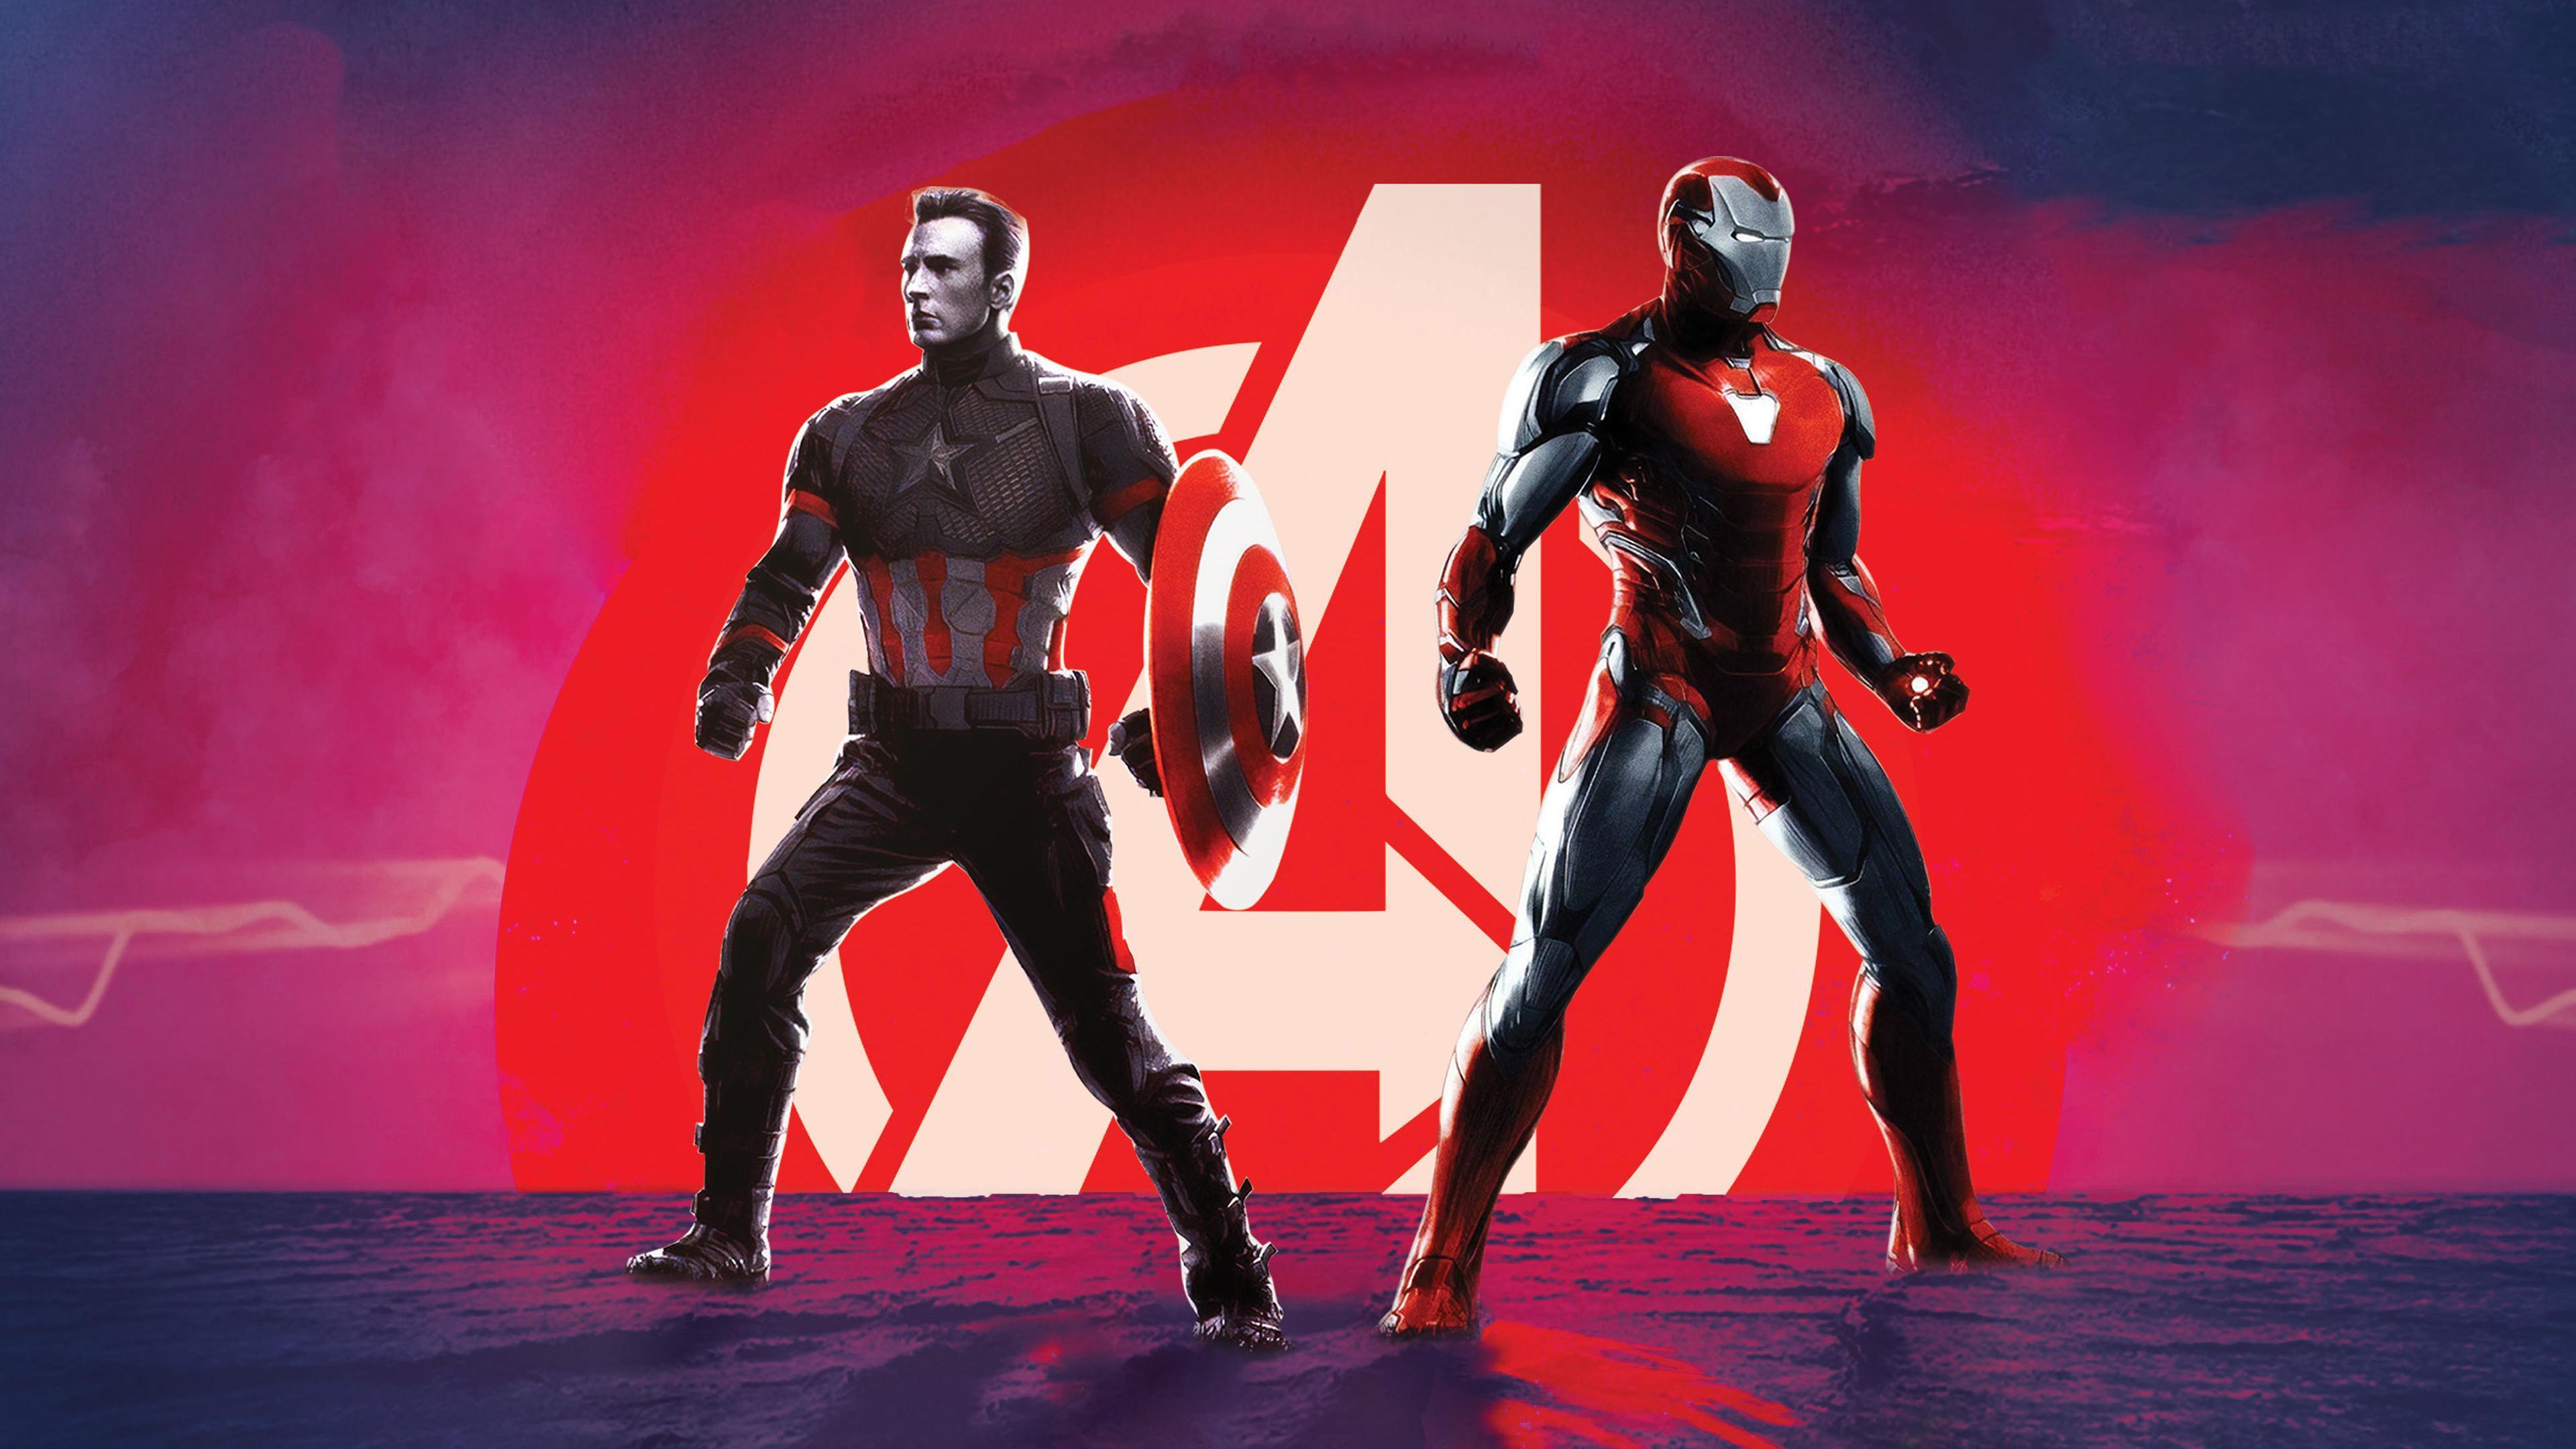 HD wallpaper, Avengers  Endgame, Captain America And Iron Man, 4K